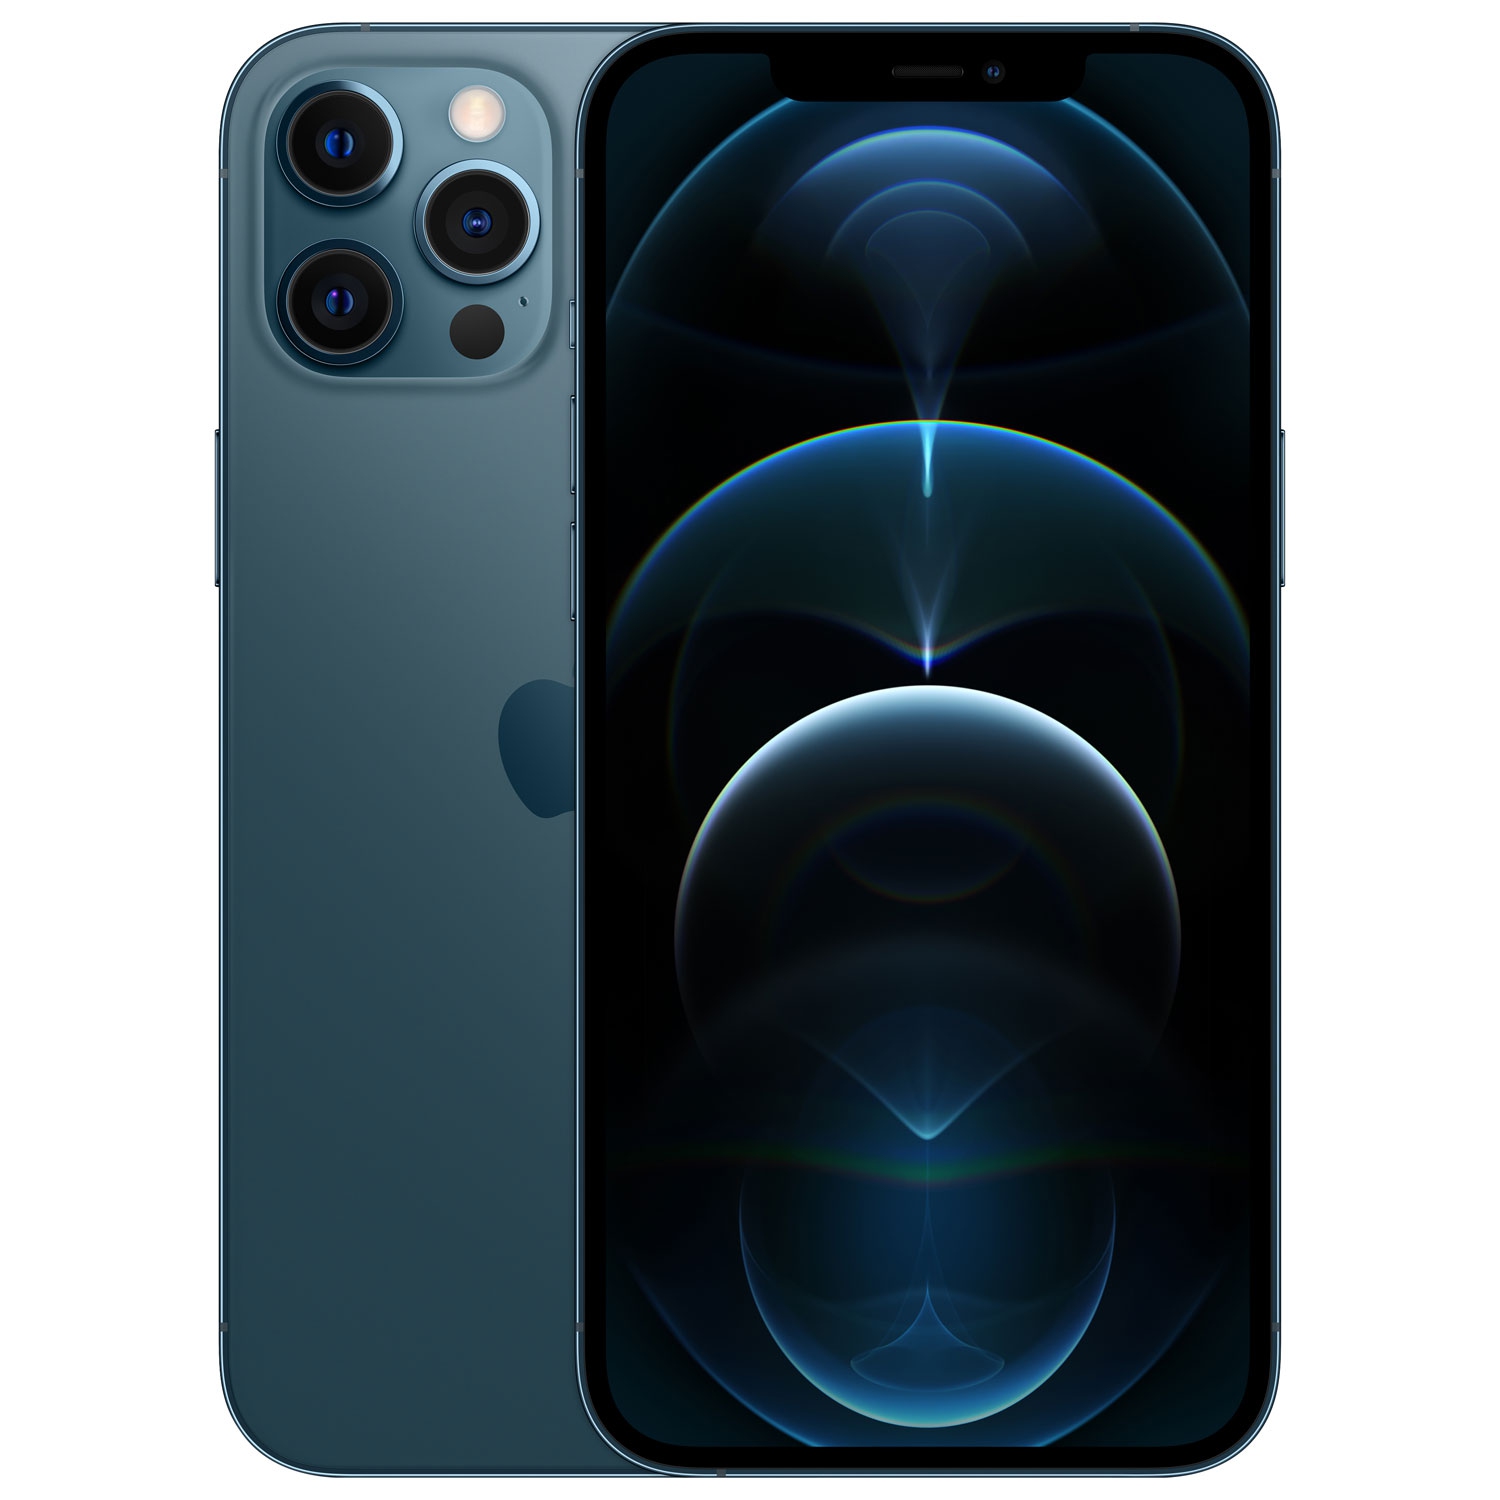 Apple iPhone 12 Pro Max 512GB - Pacific Blue - Unlocked - Open Box ( 10 / 10 Condition )